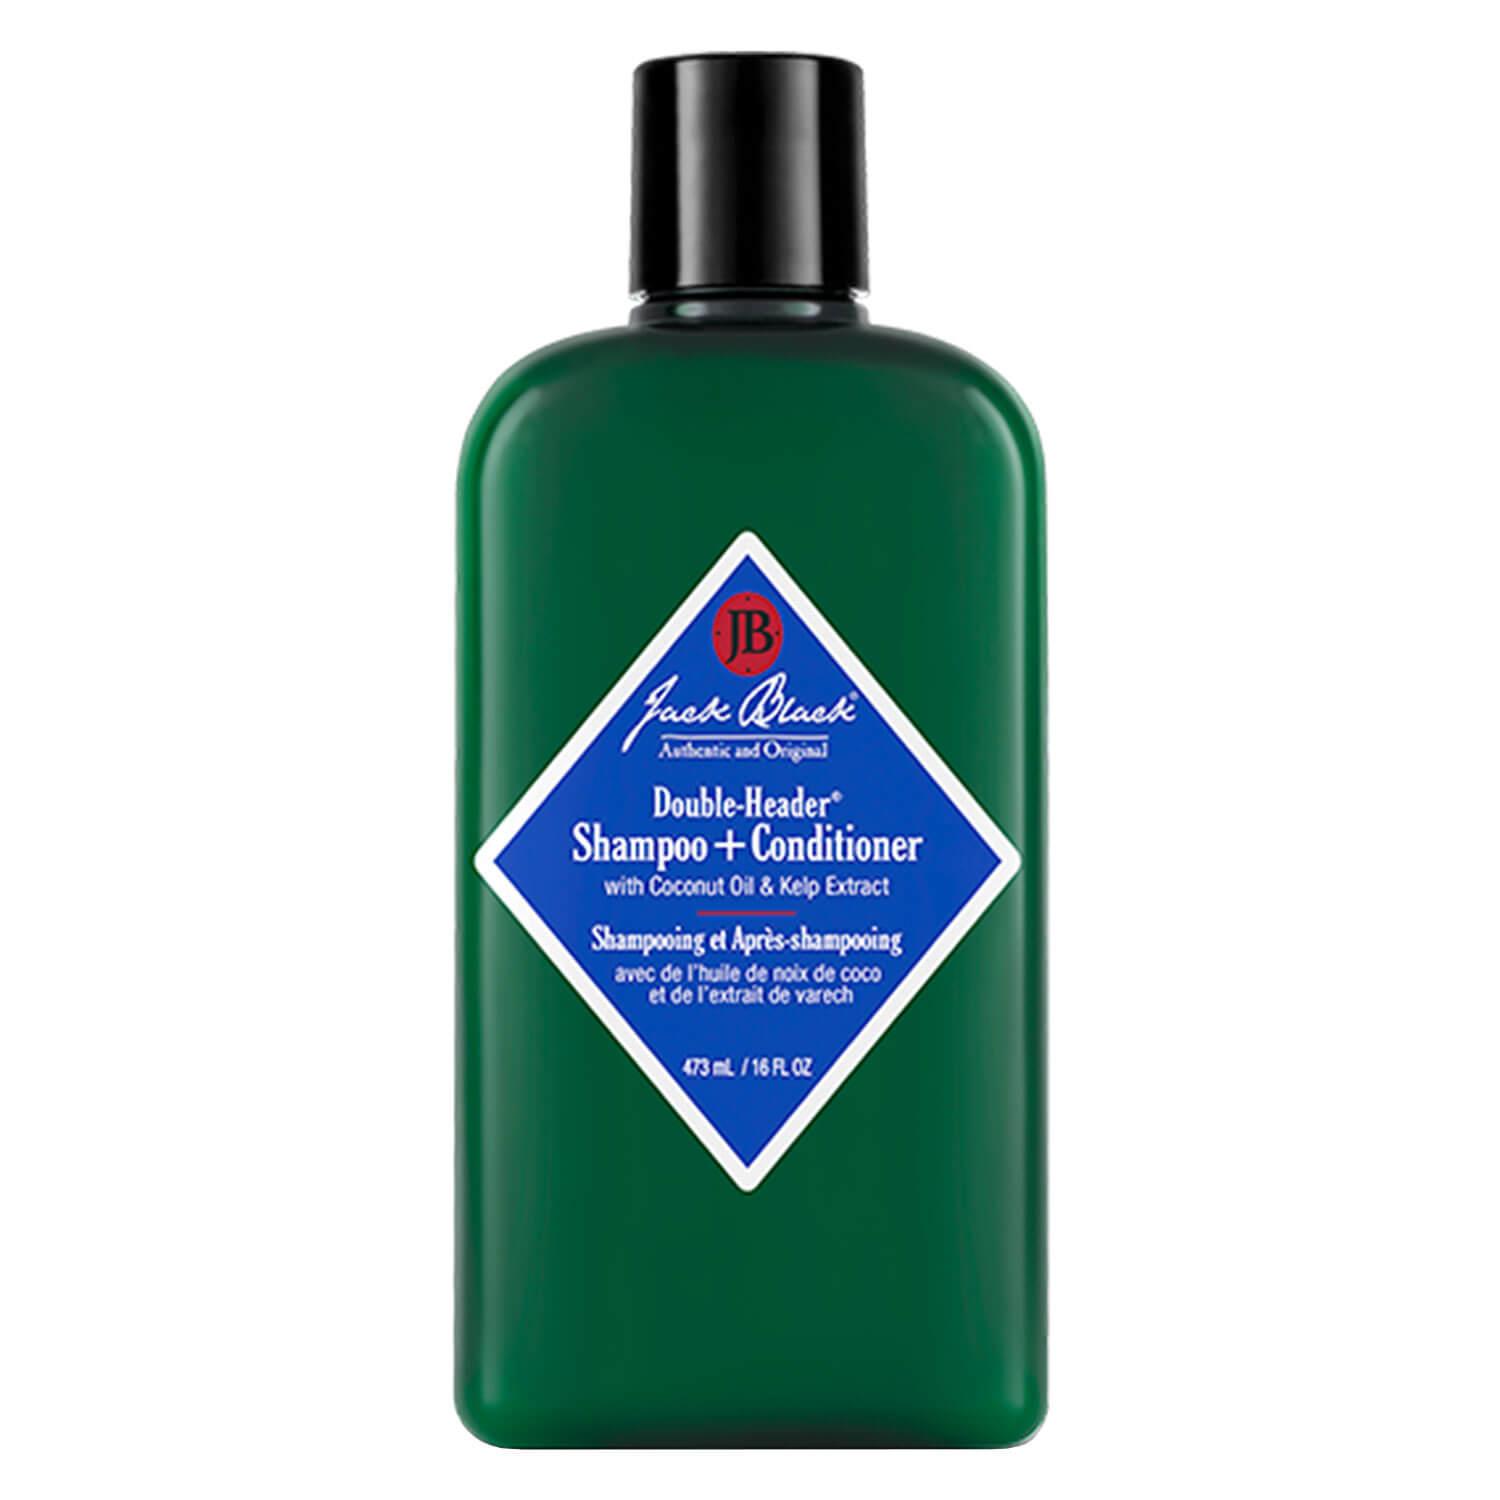 Jack Black - Double-Header Shampoo + Conditioner